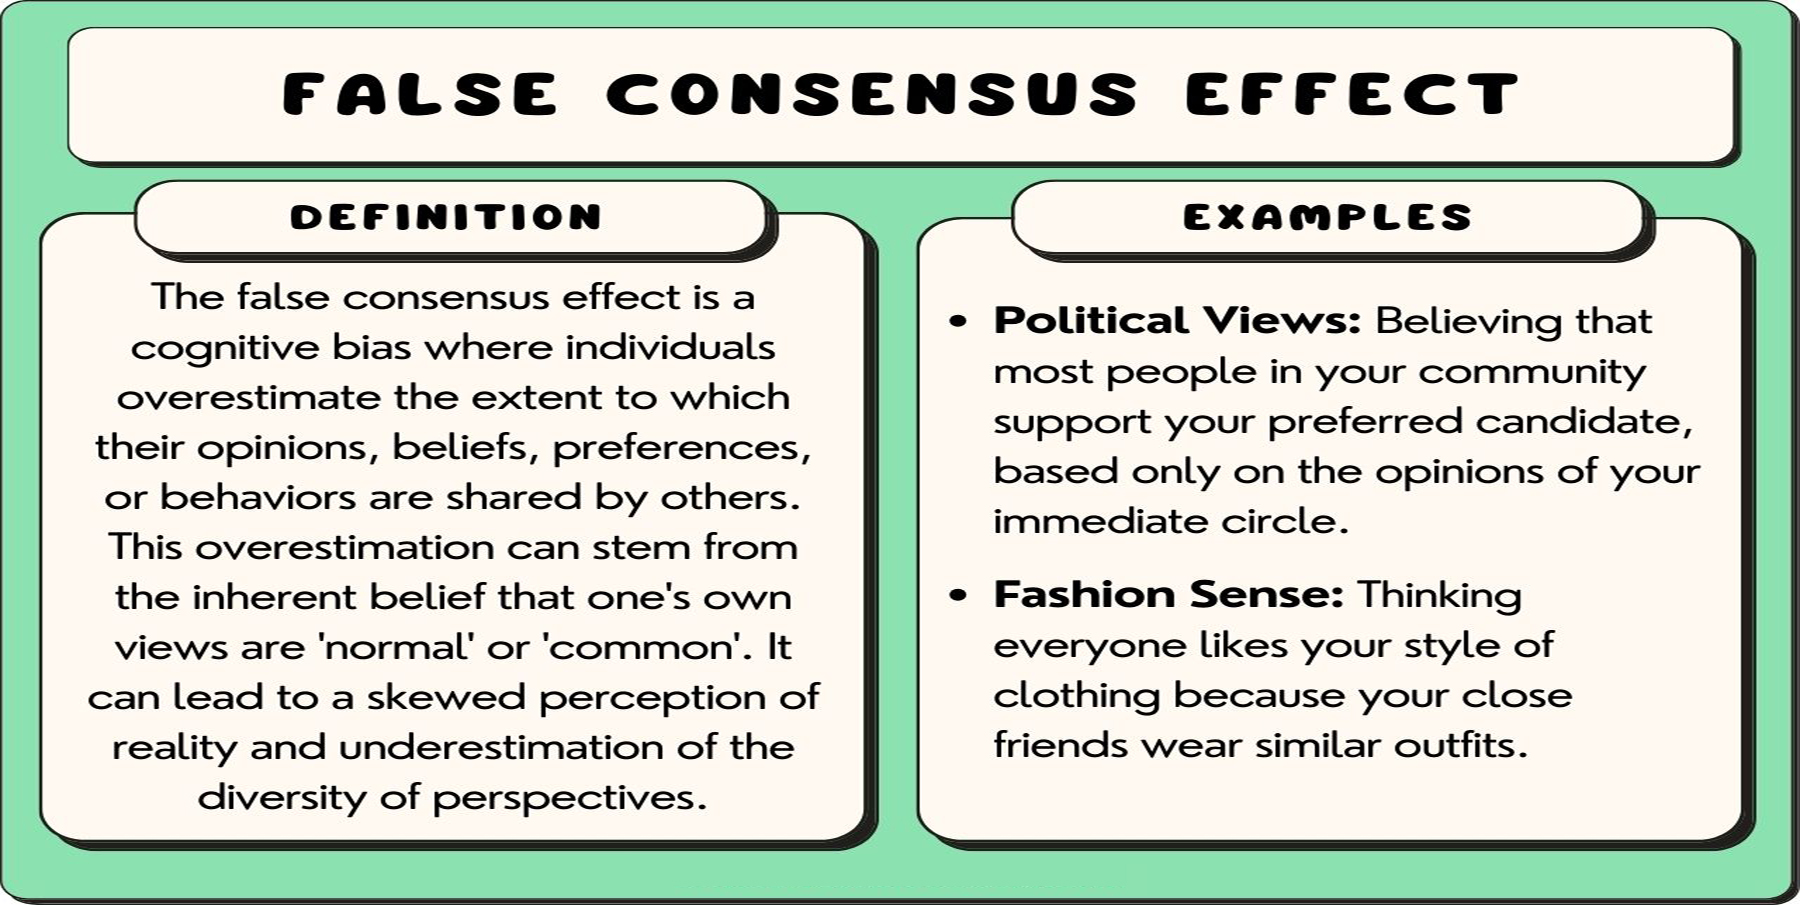 False Consensus Effect illustrations